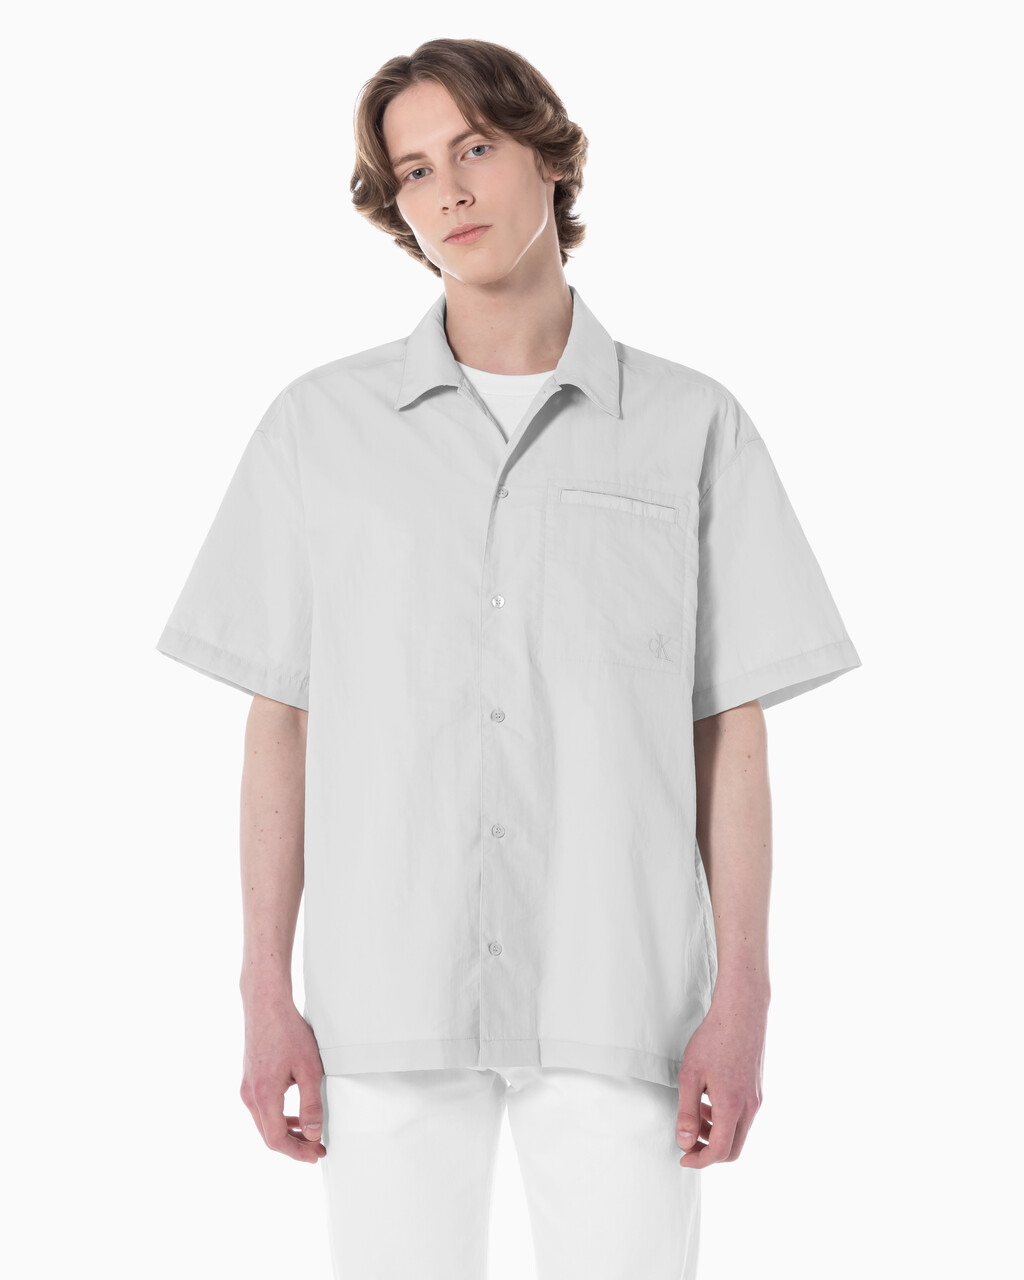 Buy 남성 릴렉스핏 반팔 셔츠 in color WHITE